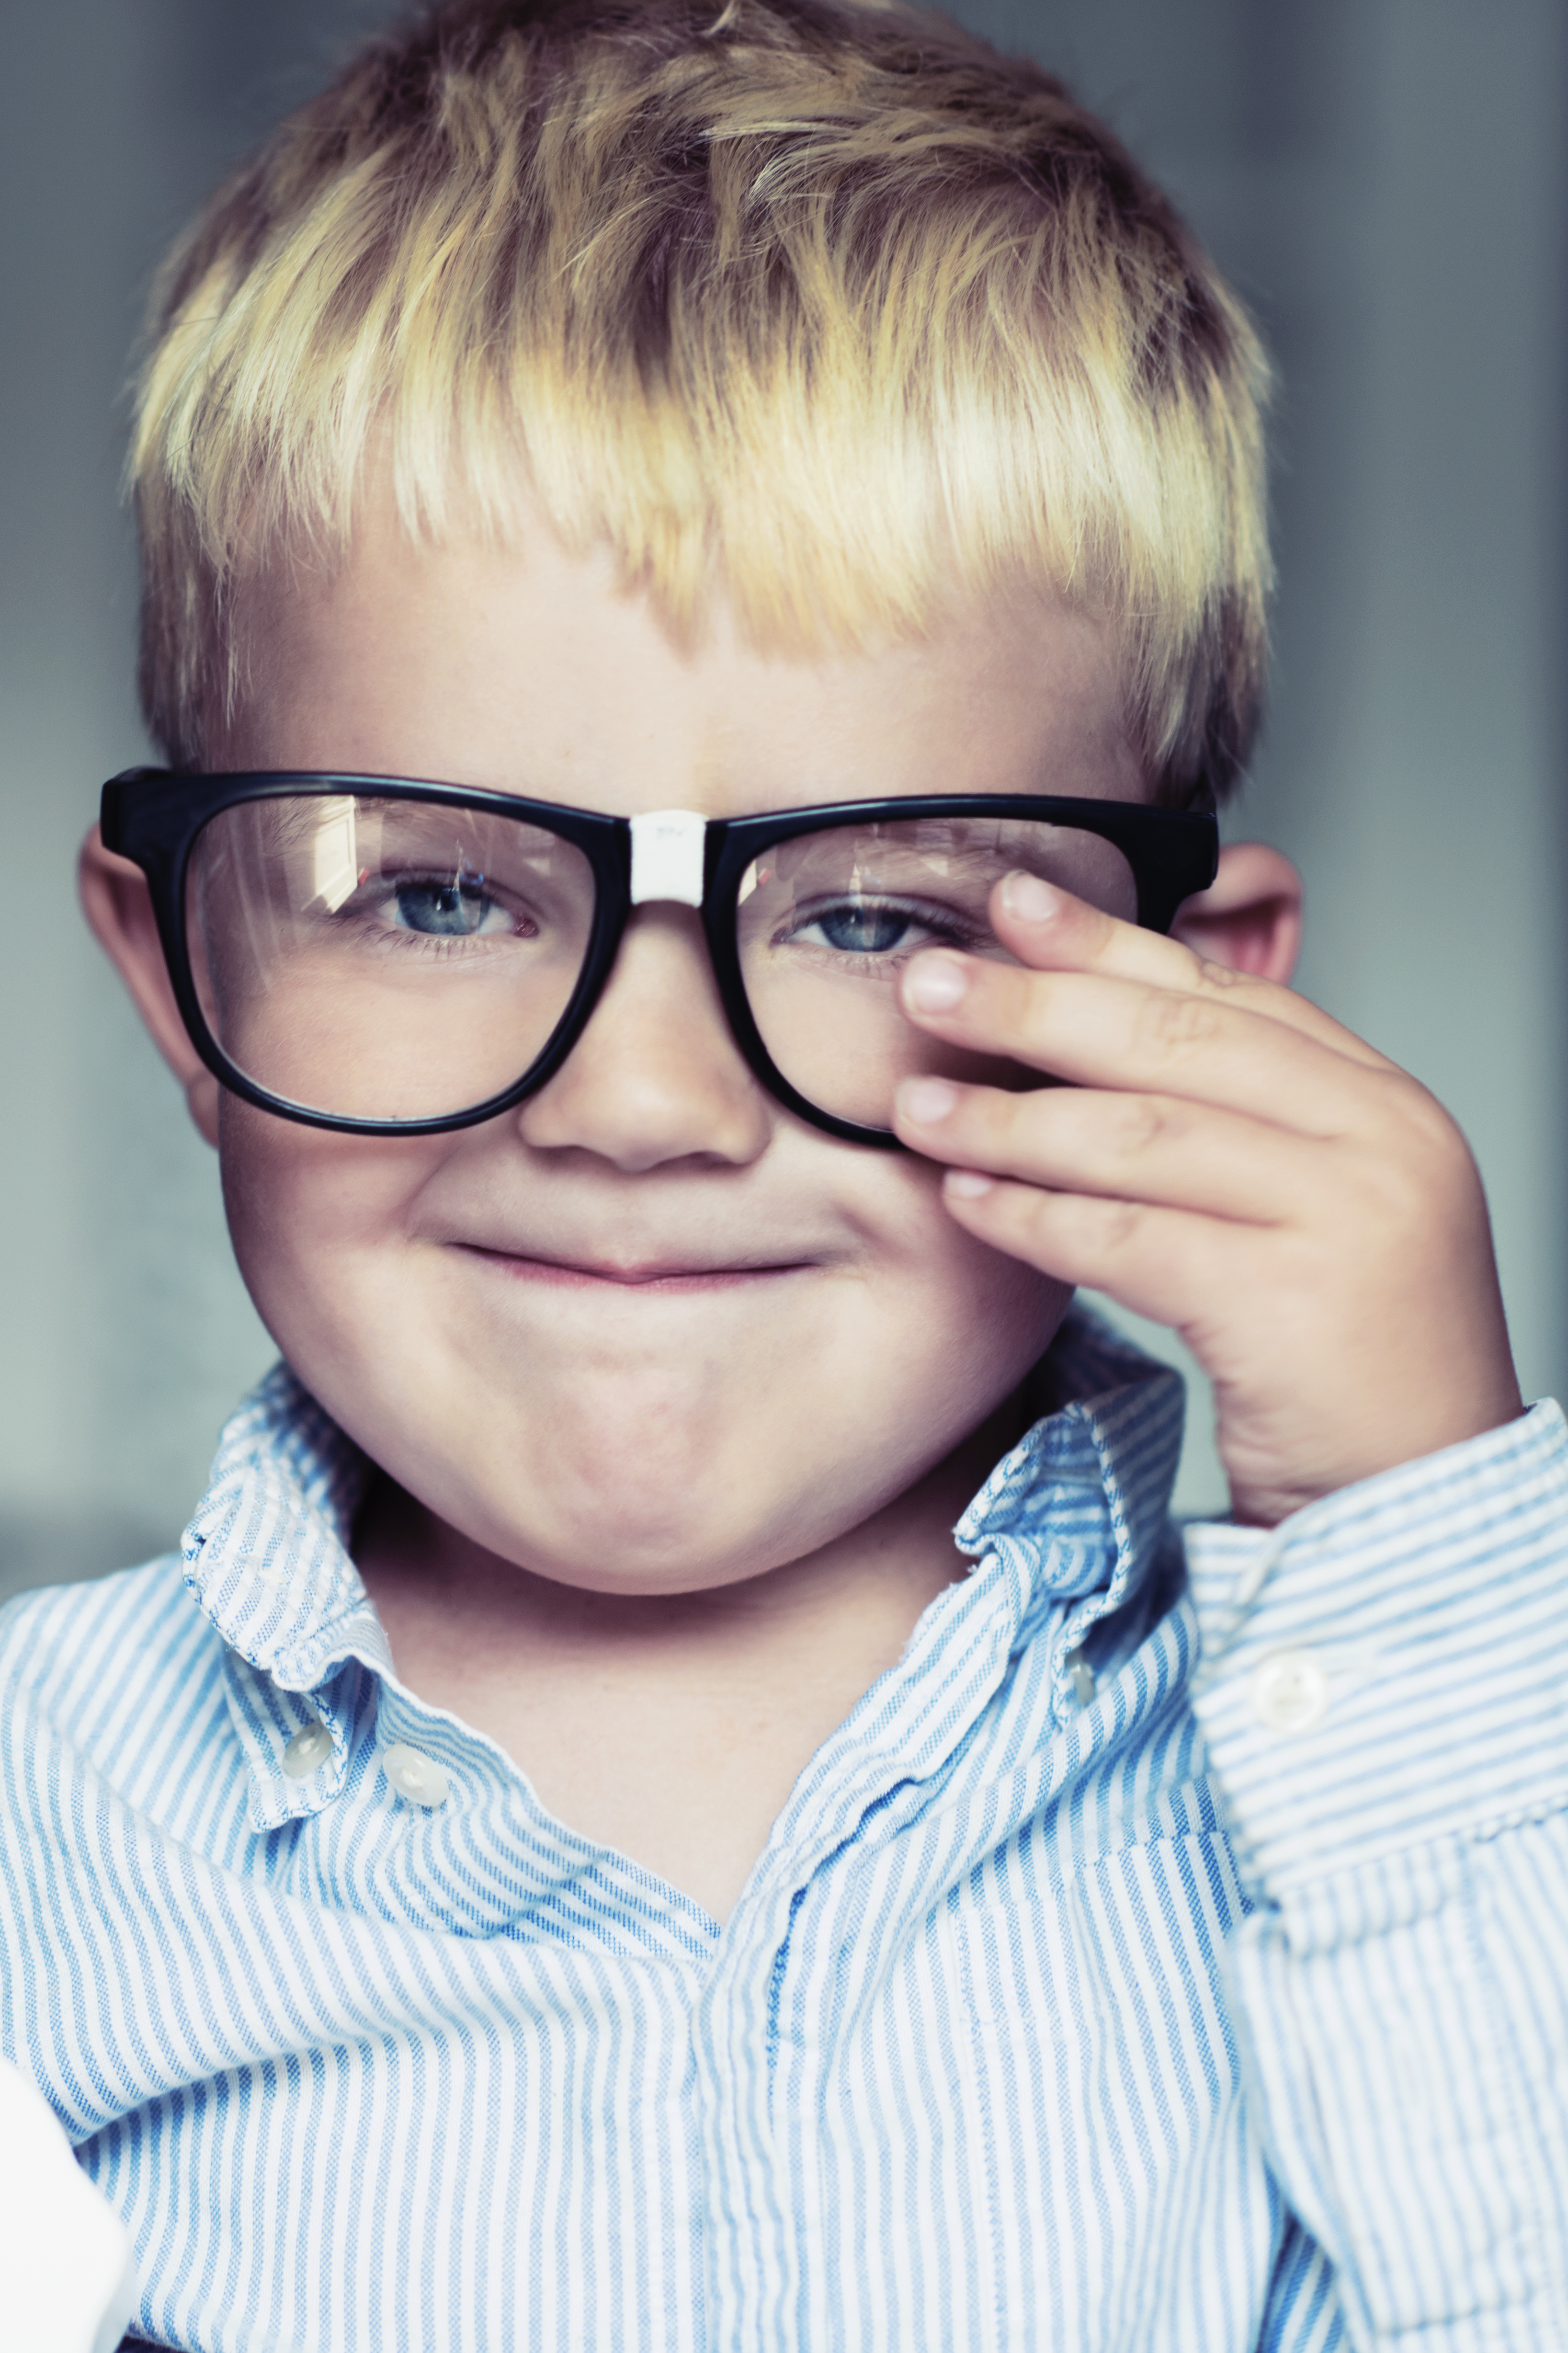 Little boy makes a face while adjusting glasses